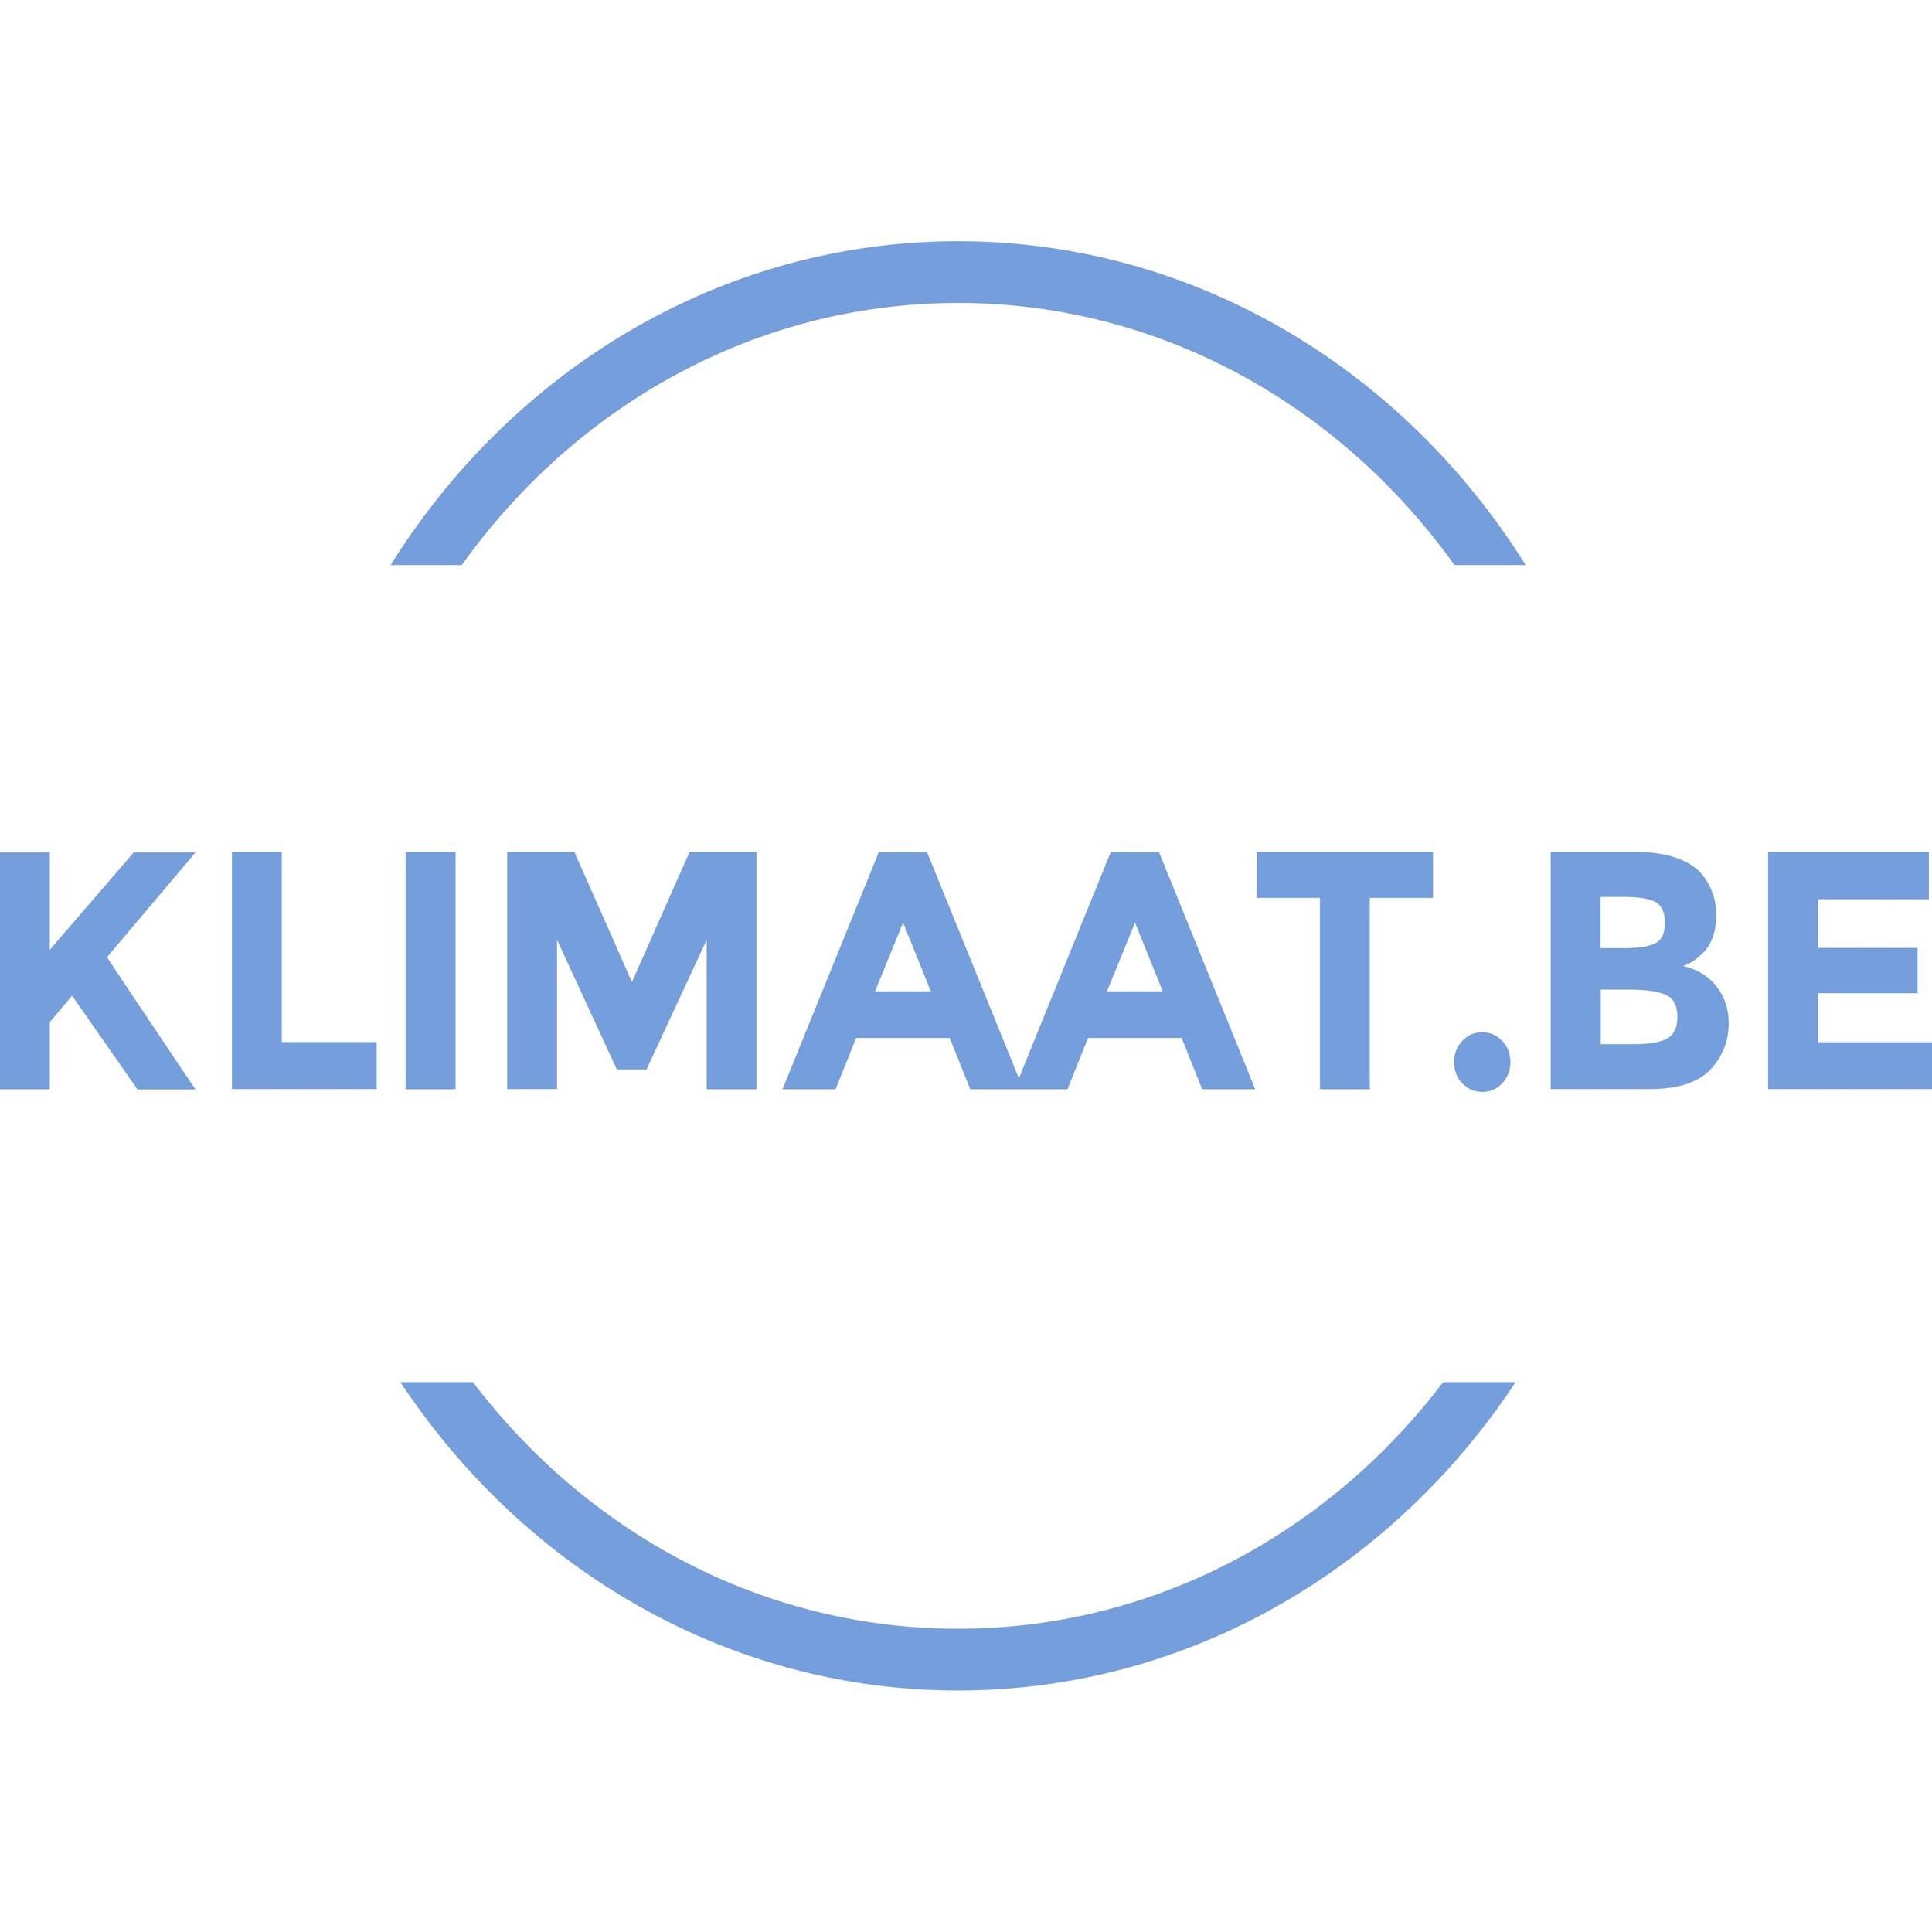 klimaat-logo jpg.jpg